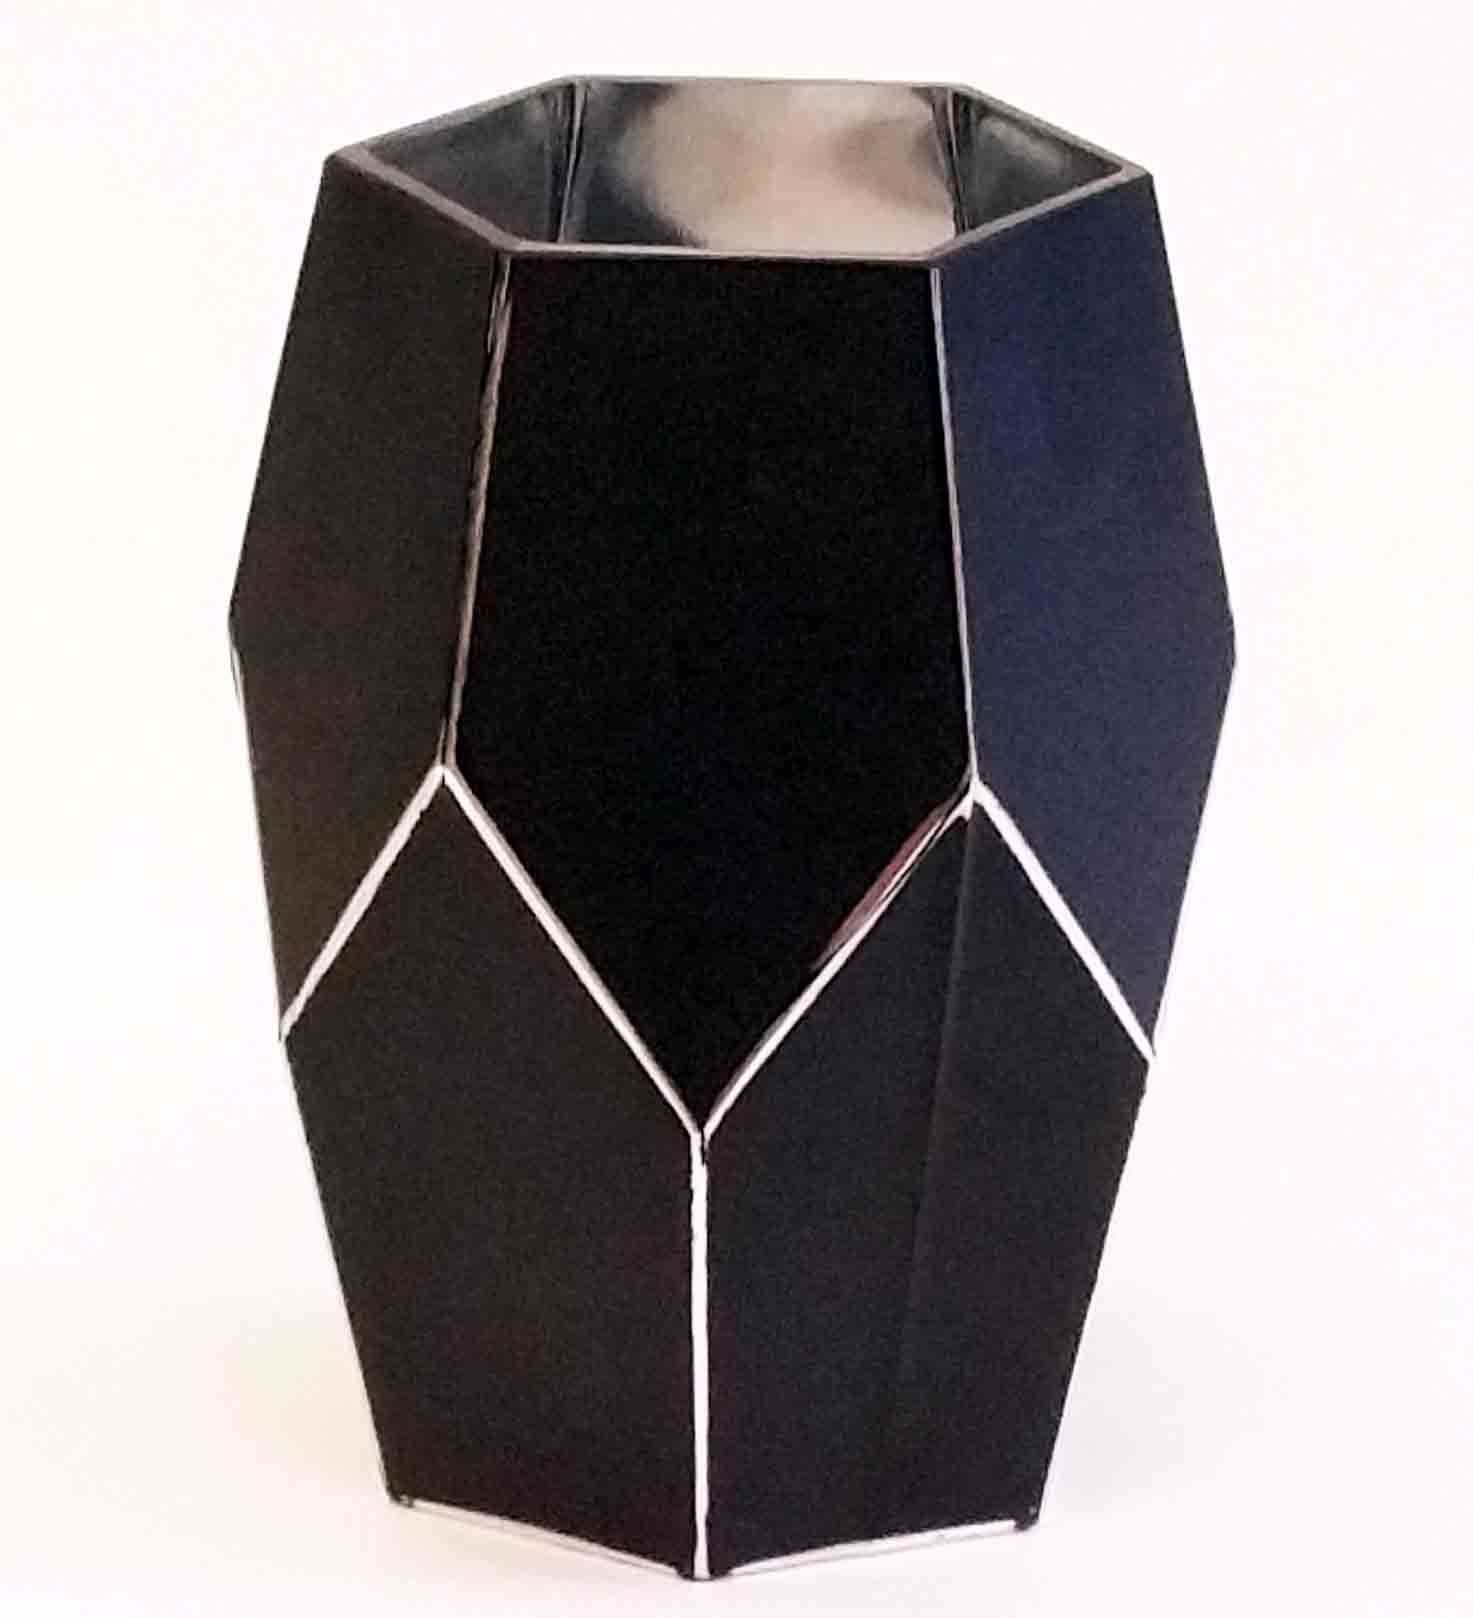 GC520 - 8" Hexagonal Vase - 8.65 ea, 8.35/12